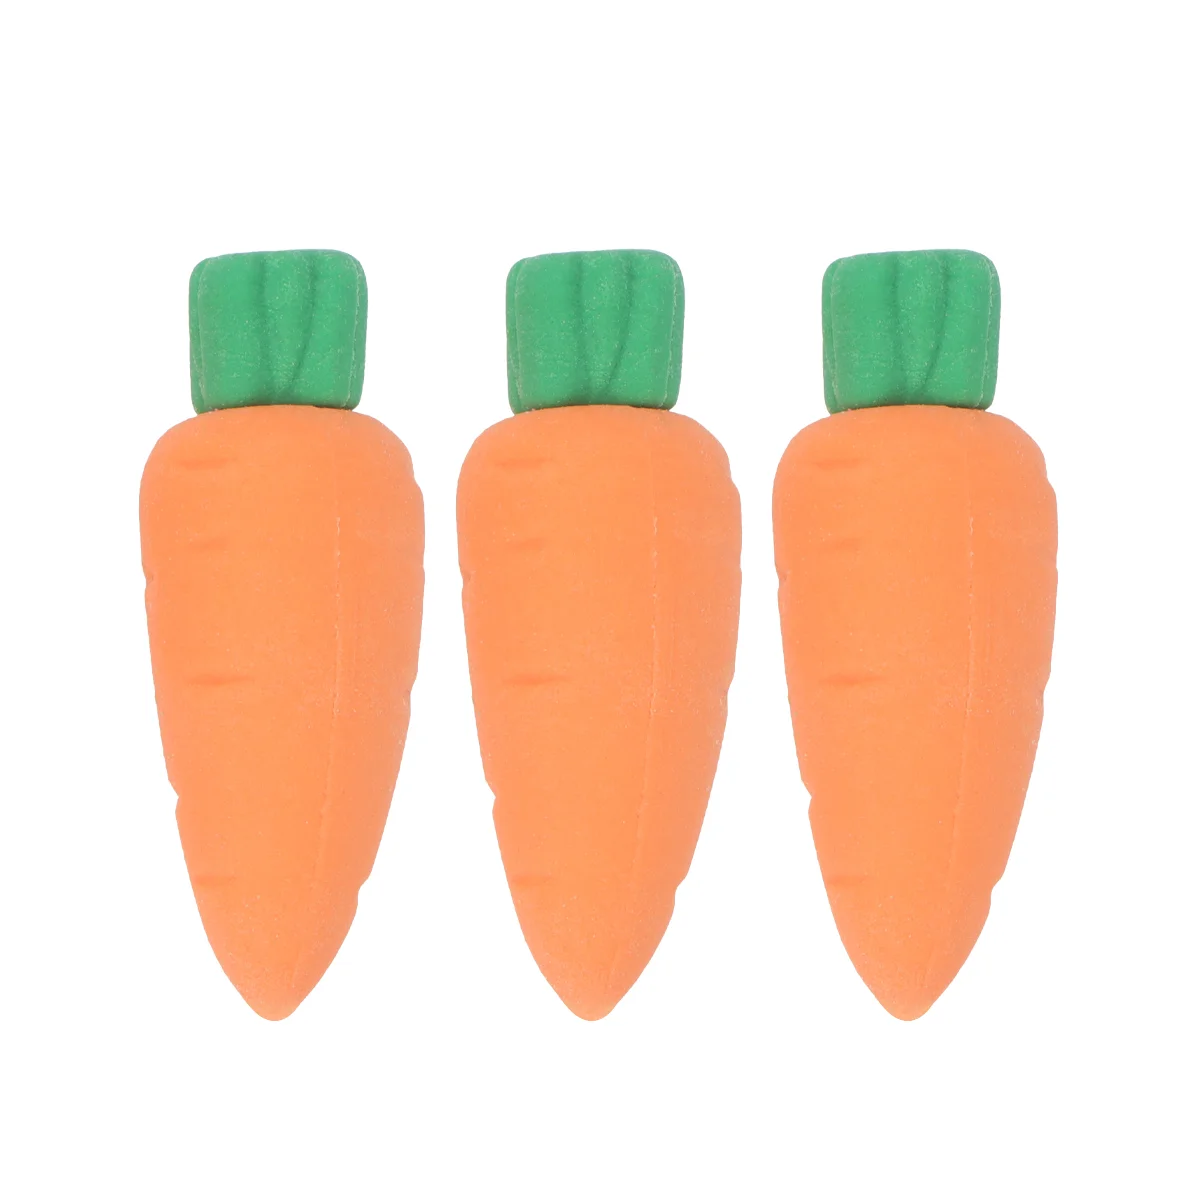 

30pcs Carrot Erasers Novelty Rubber Eraser Carrot for Party Favors Gifts Basket Fillers